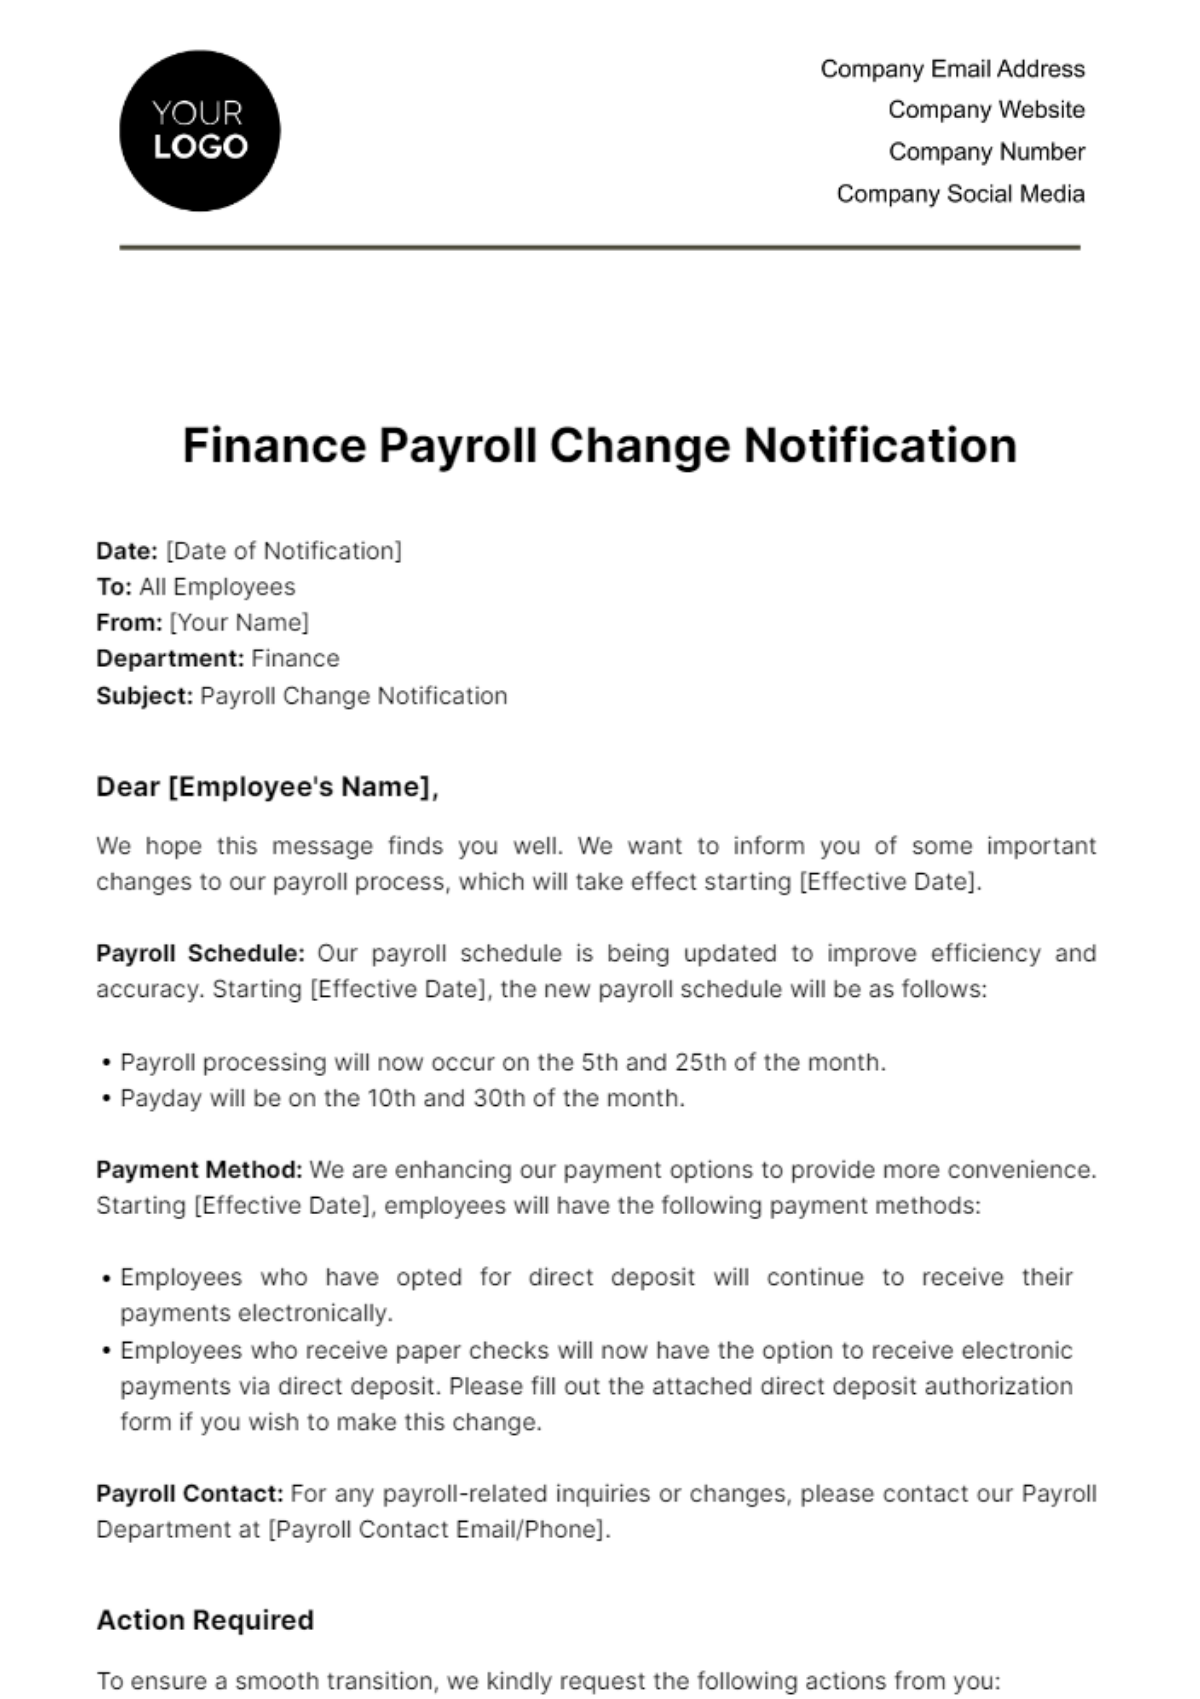 Free Finance Payroll Change Notification Template